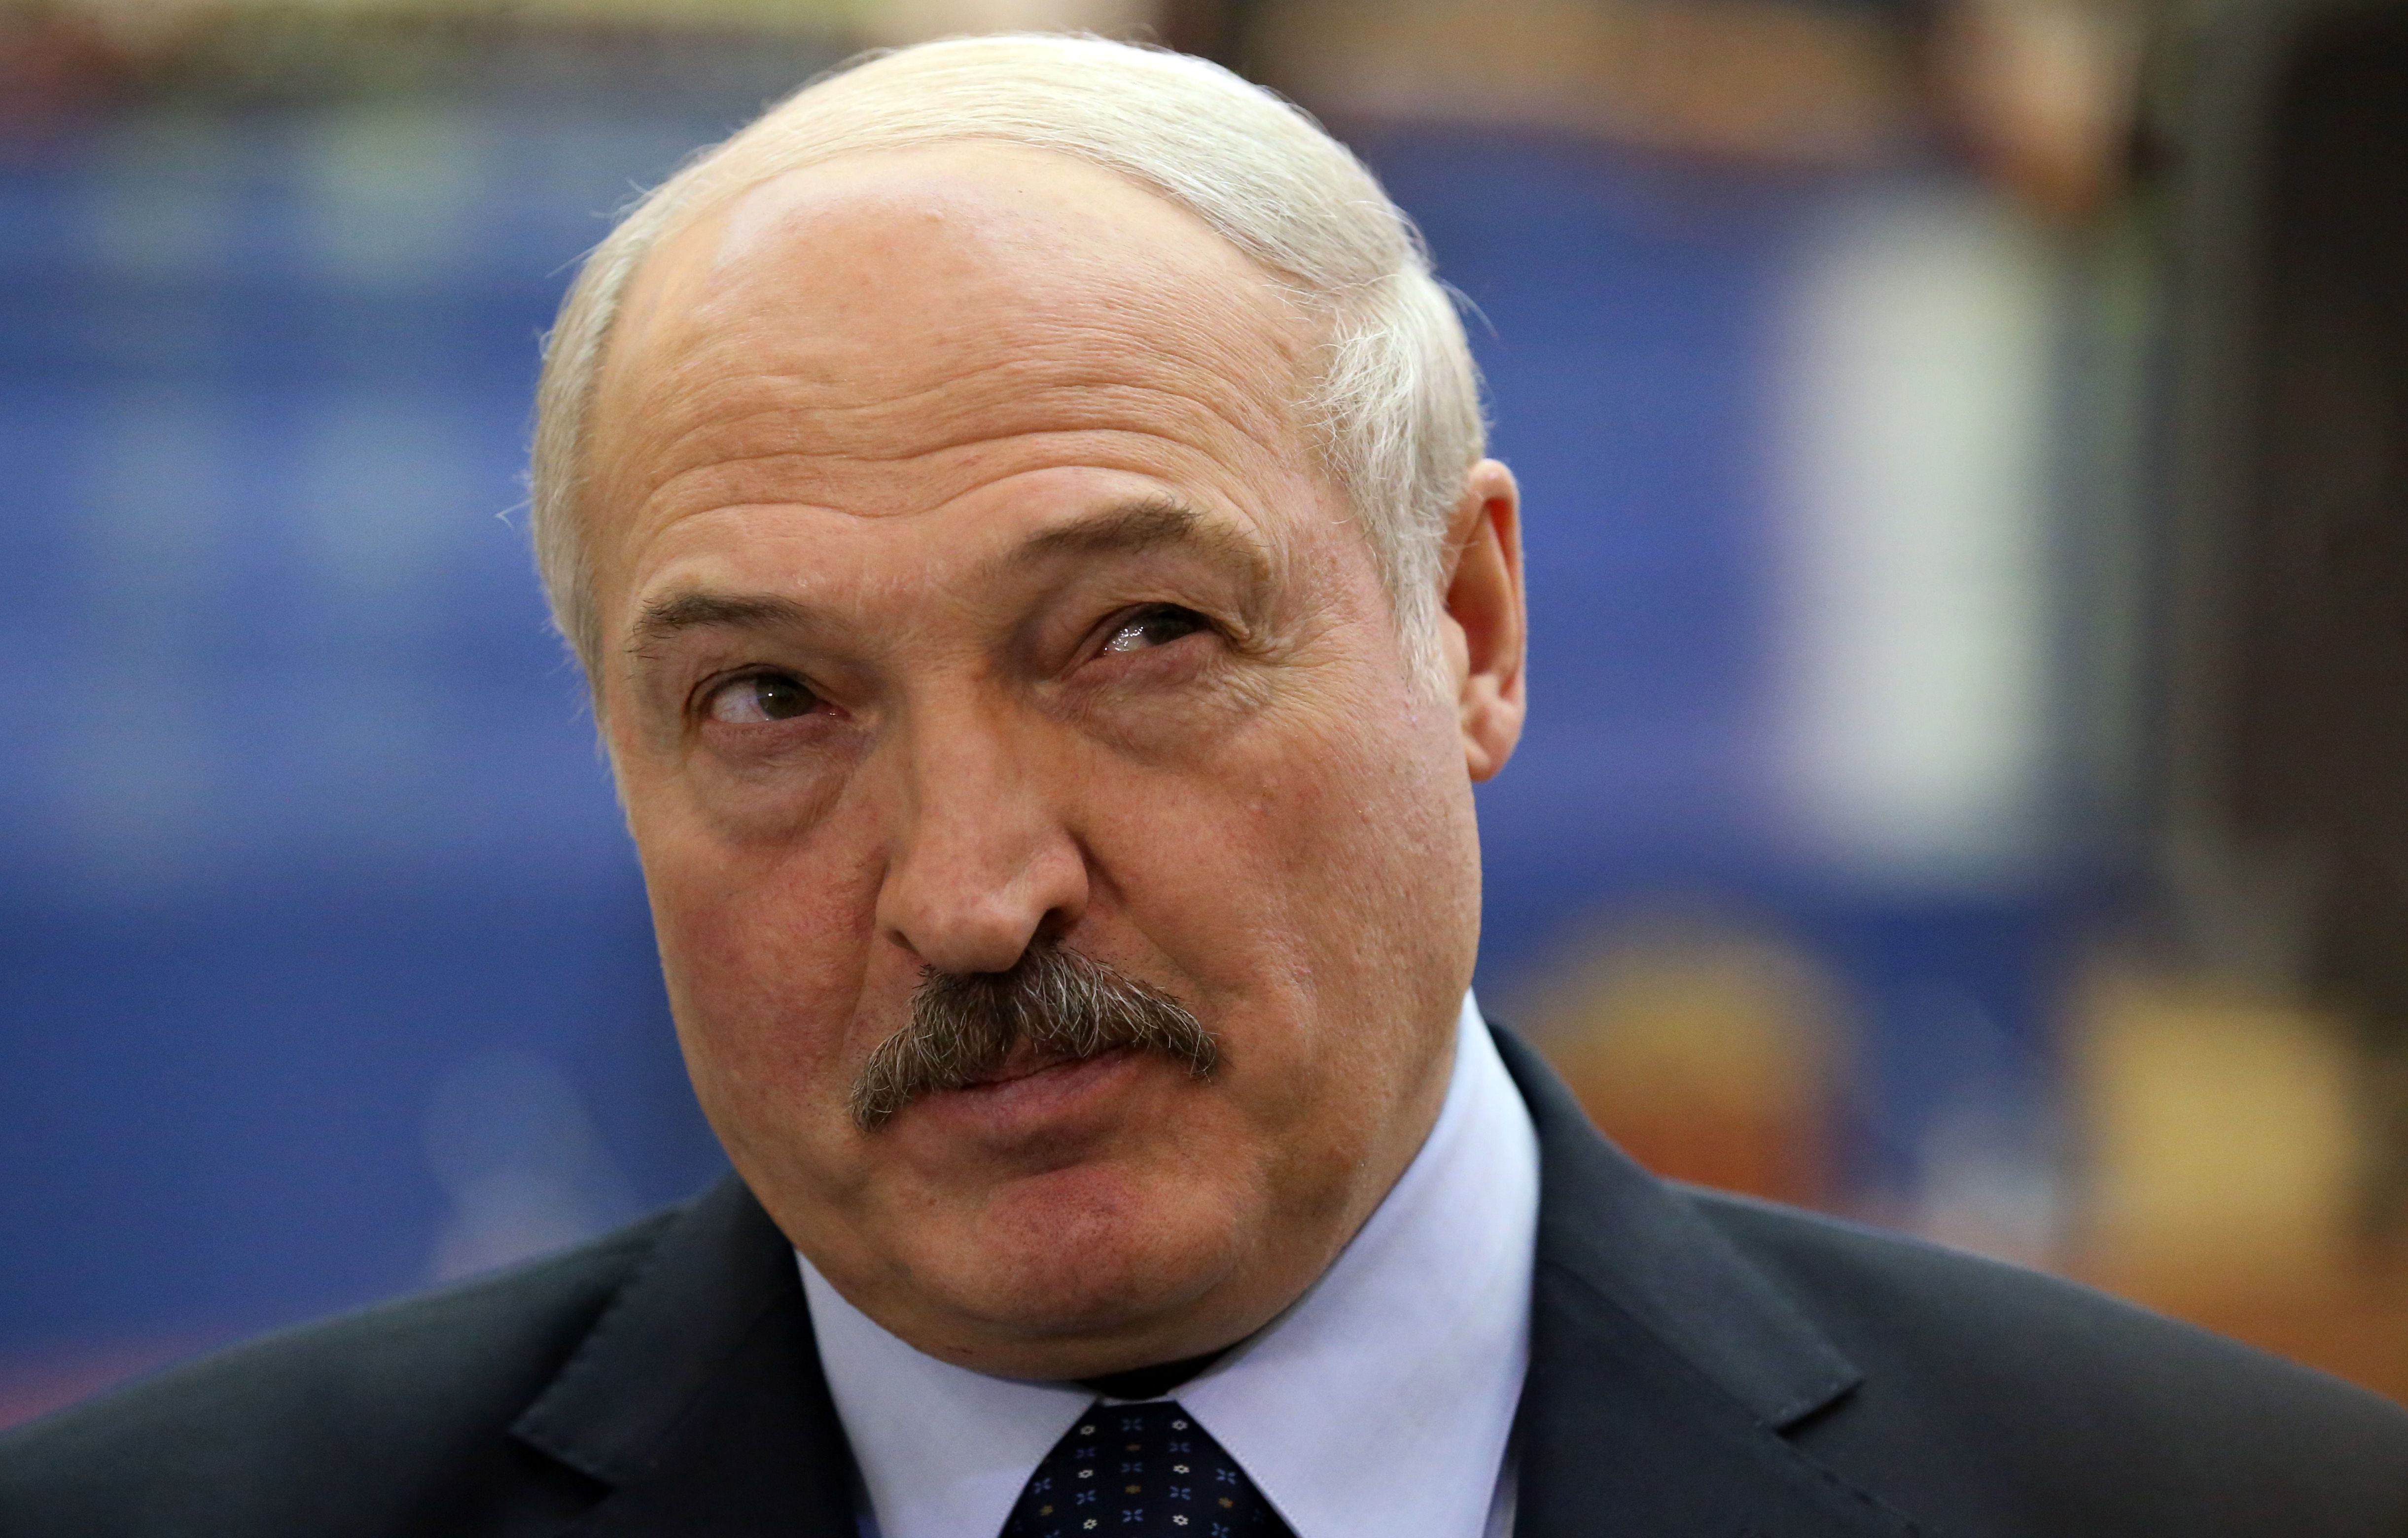 Беларусь ситуация на границе - что означают заявления Беларуси о сложной ситуации - 24 Канал